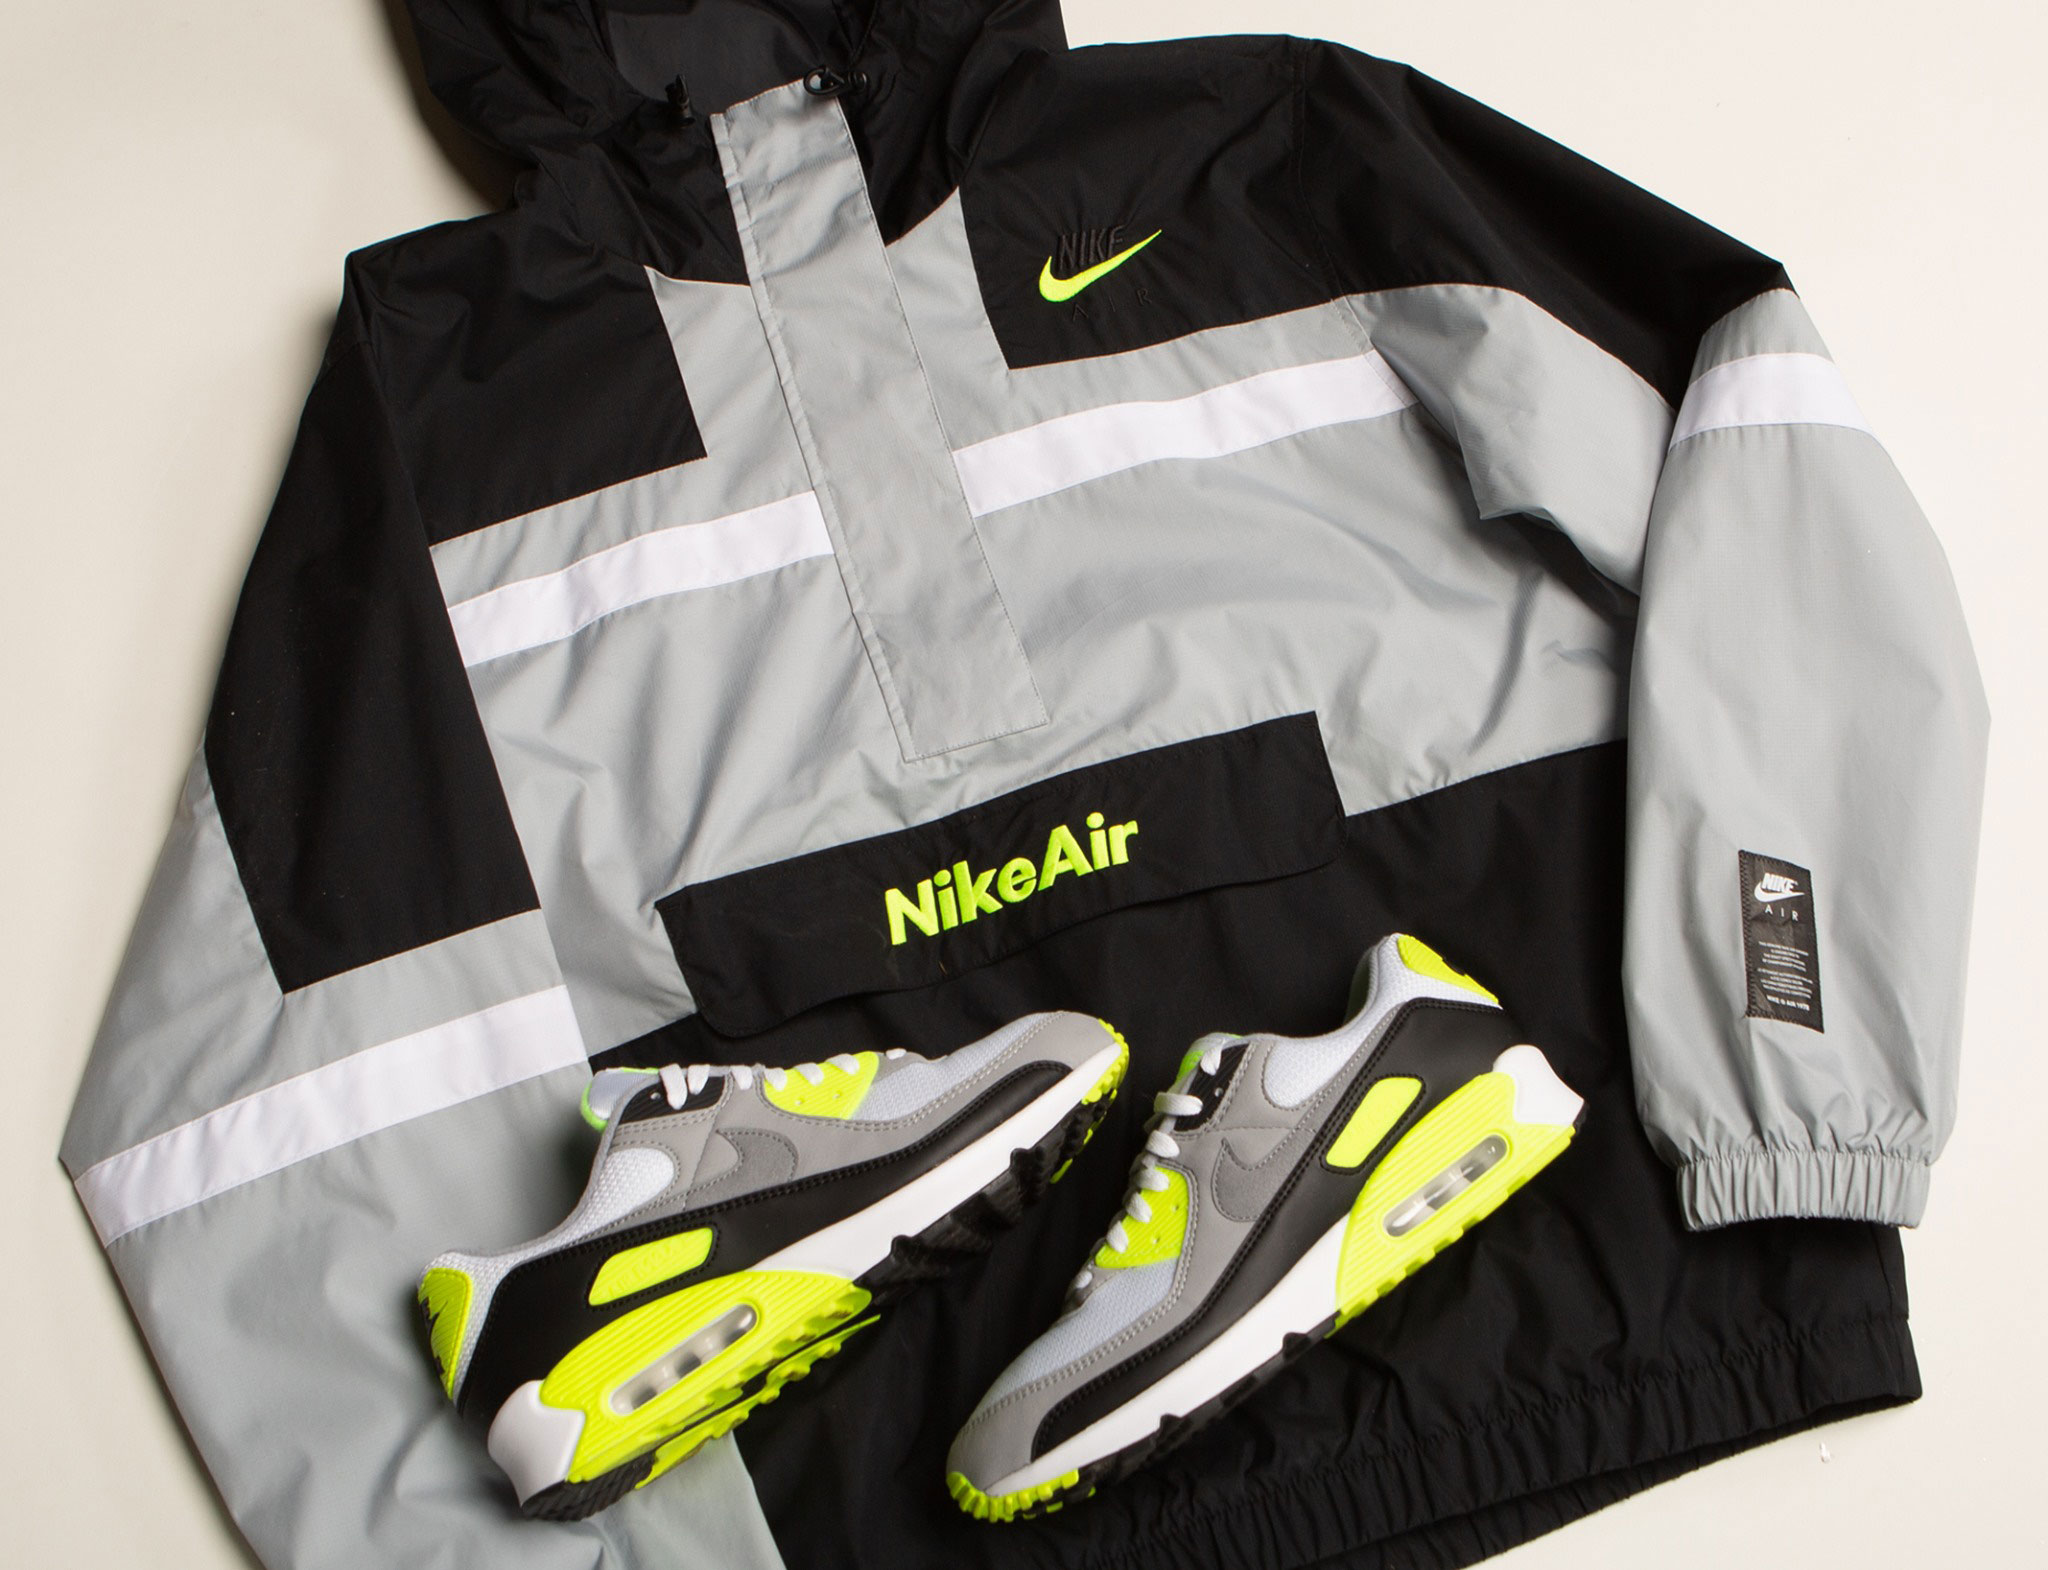 Nike Air Max 90 OG Volt Jackets to 